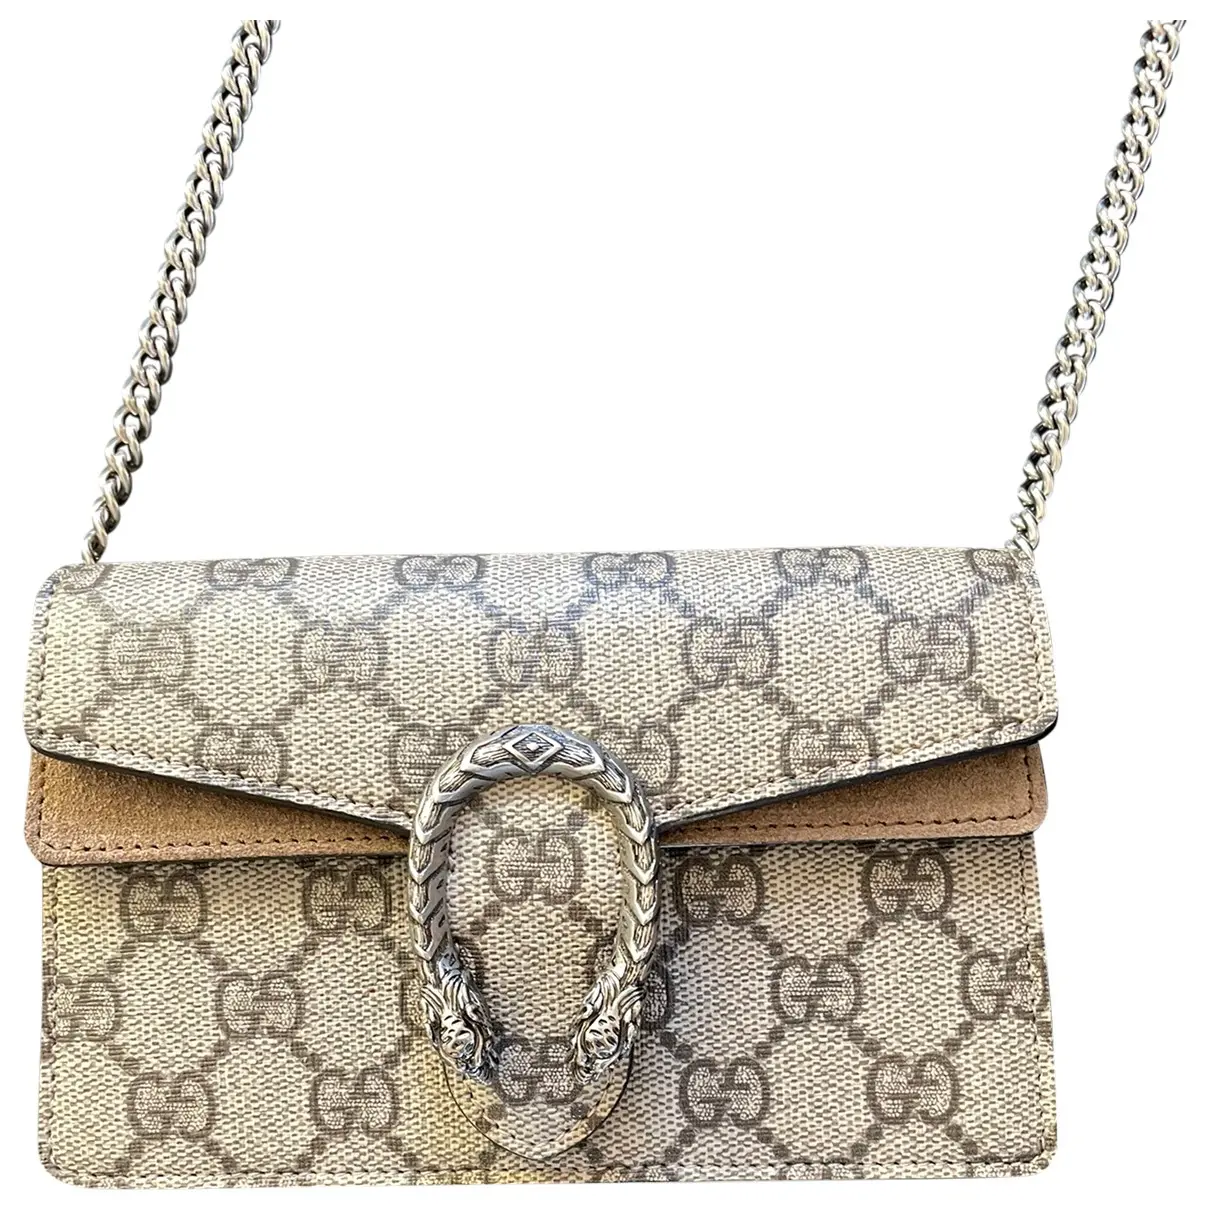 Dionysus leather handbag Gucci